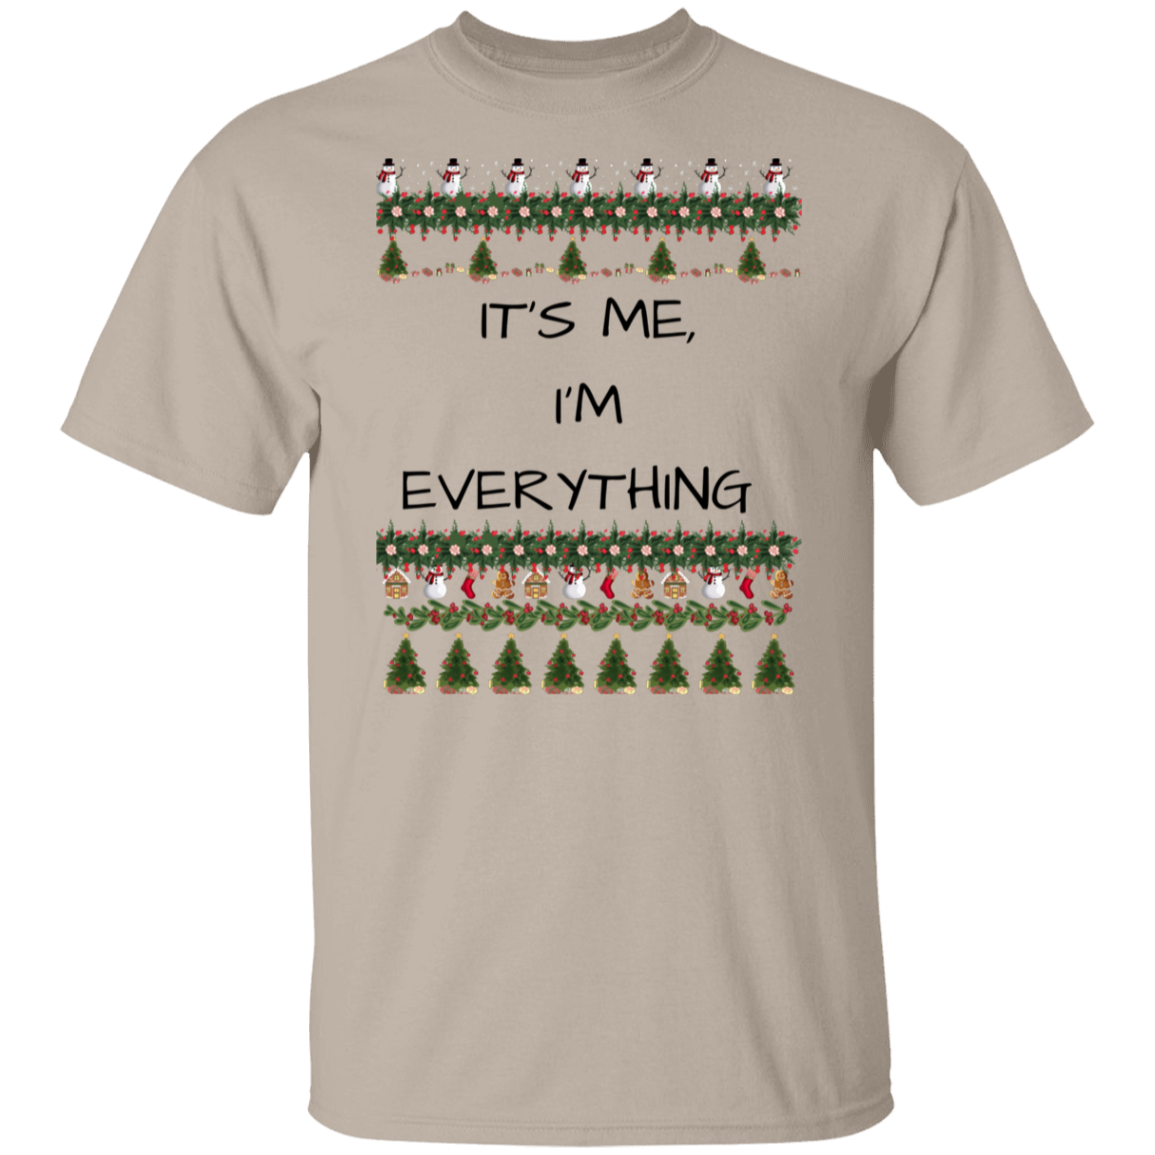 I'M EVERYTHING T-Shirt